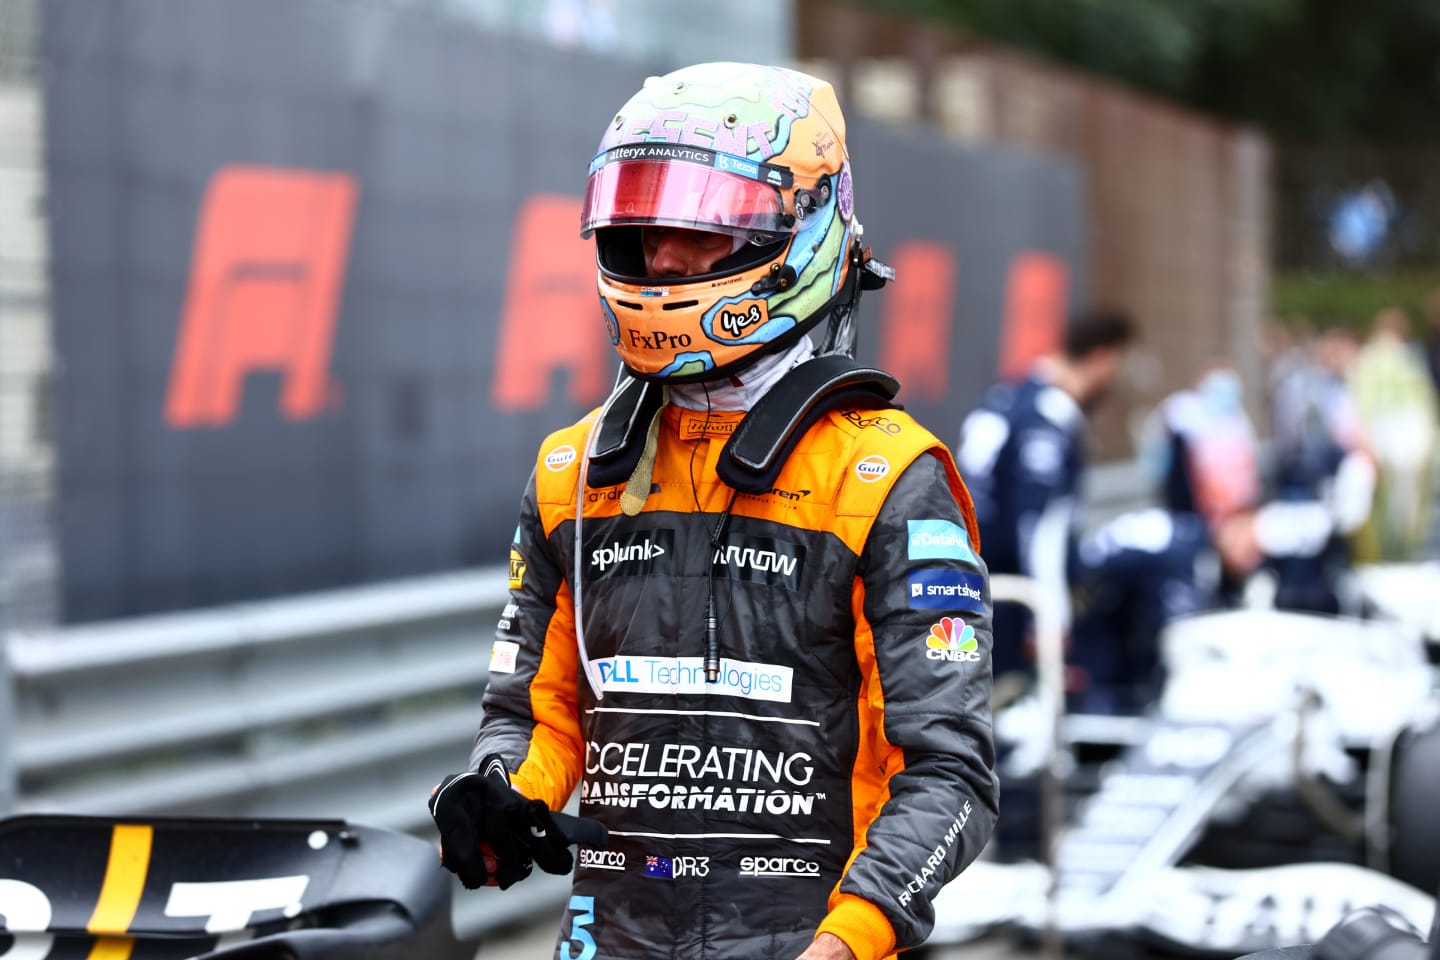 IMOLA, ITALY - APRIL 24: 18th placed Daniel Ricciardo of Australia and McLaren walks in parc ferme